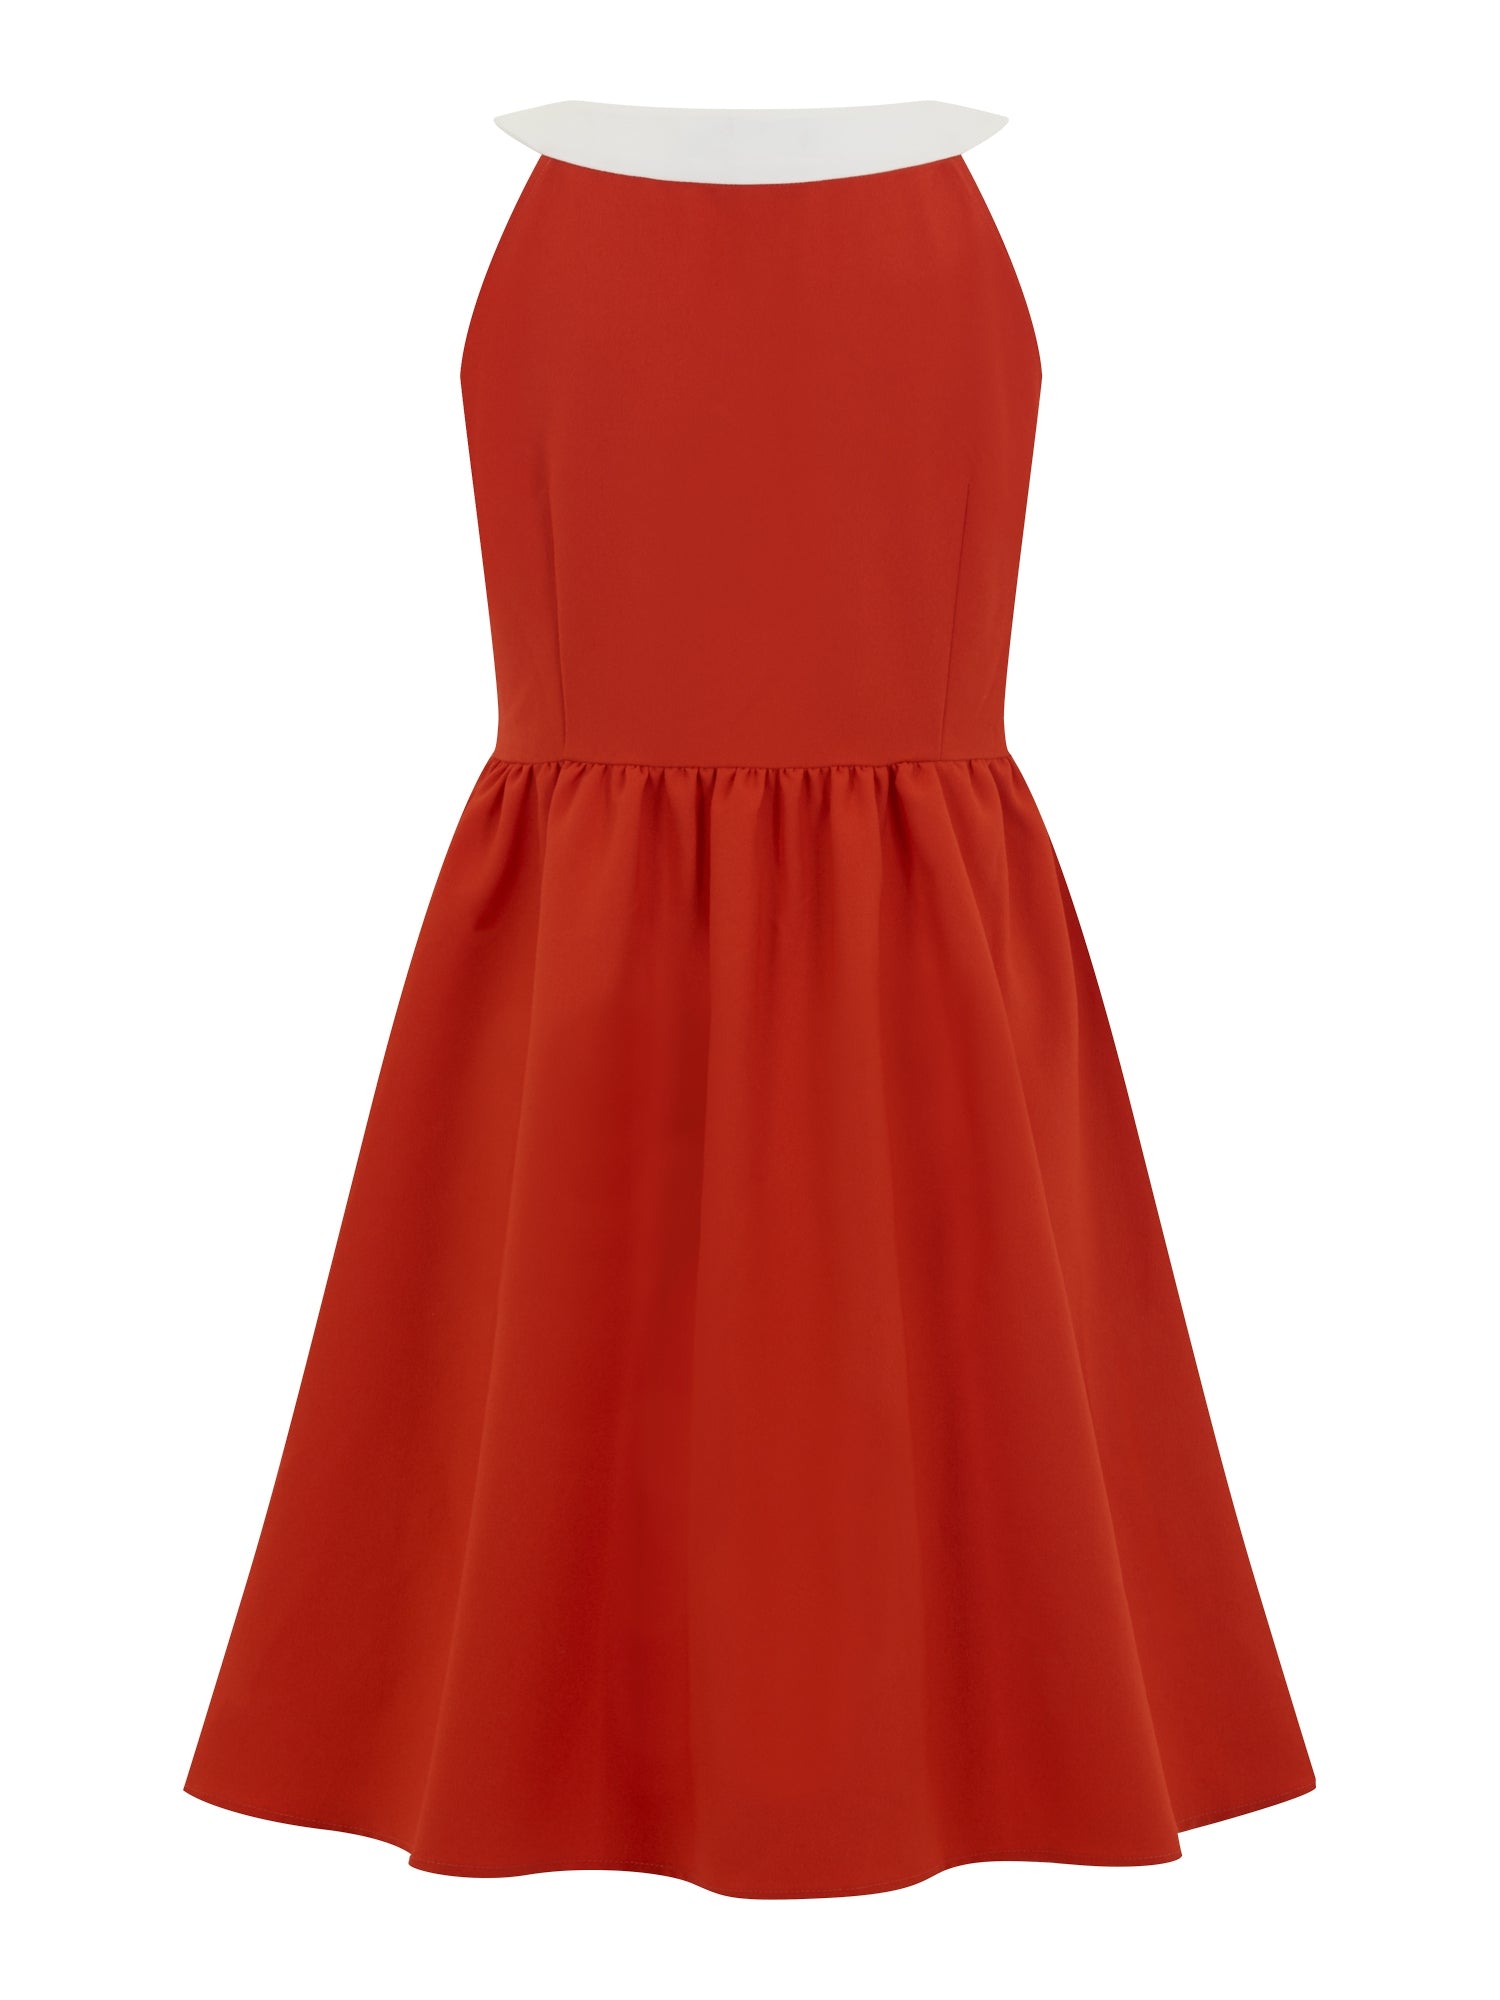 Magnolia Sleeveless Babydoll Dress - Bright And Beautiful (Last Available)